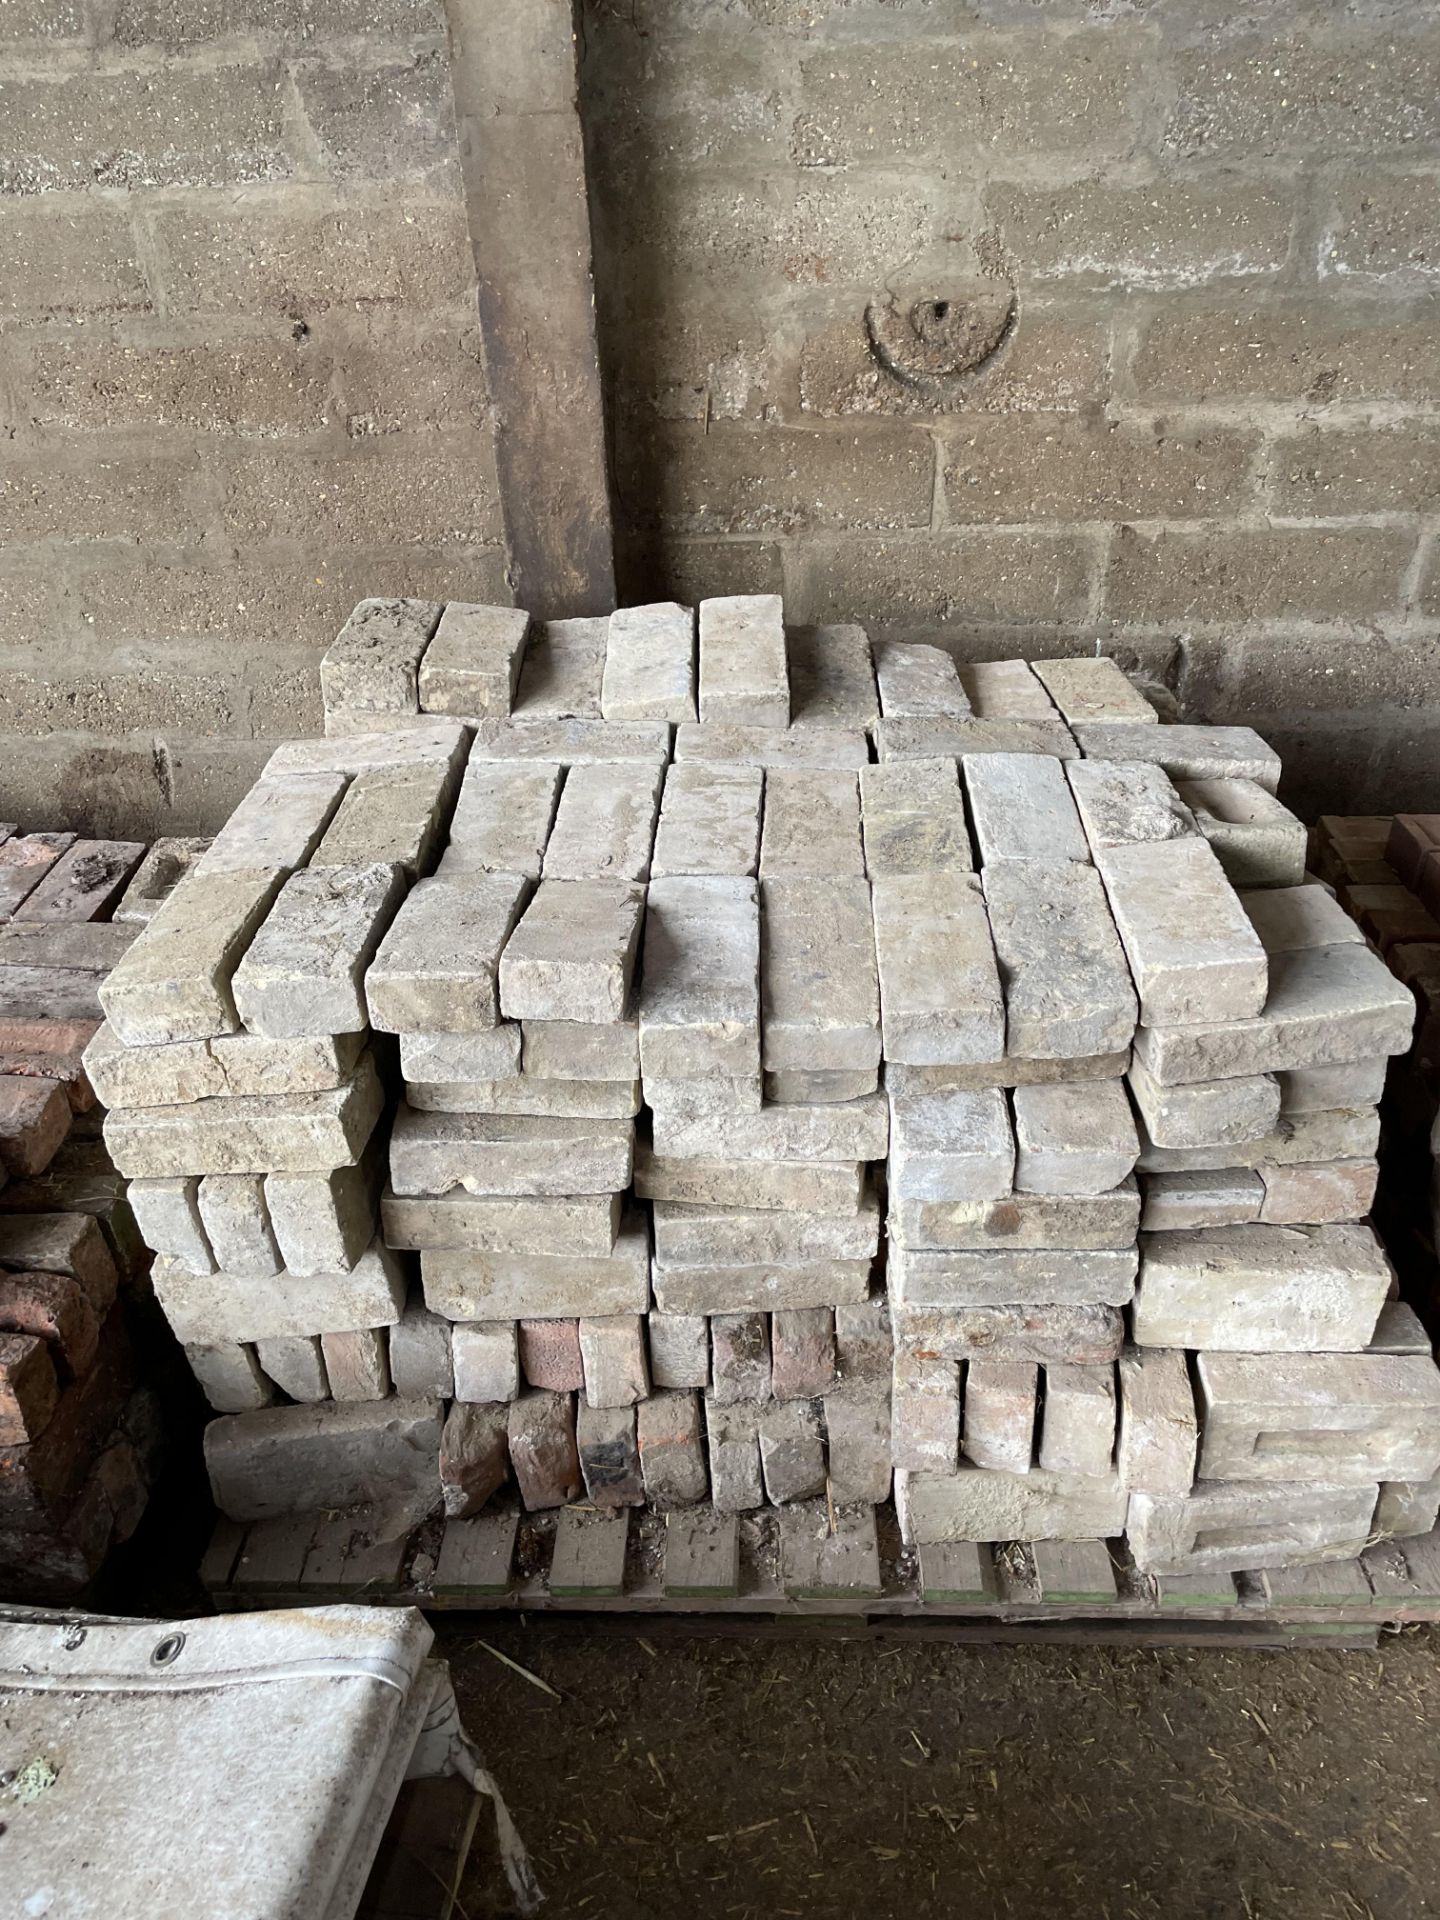 Quantity of White Bricks